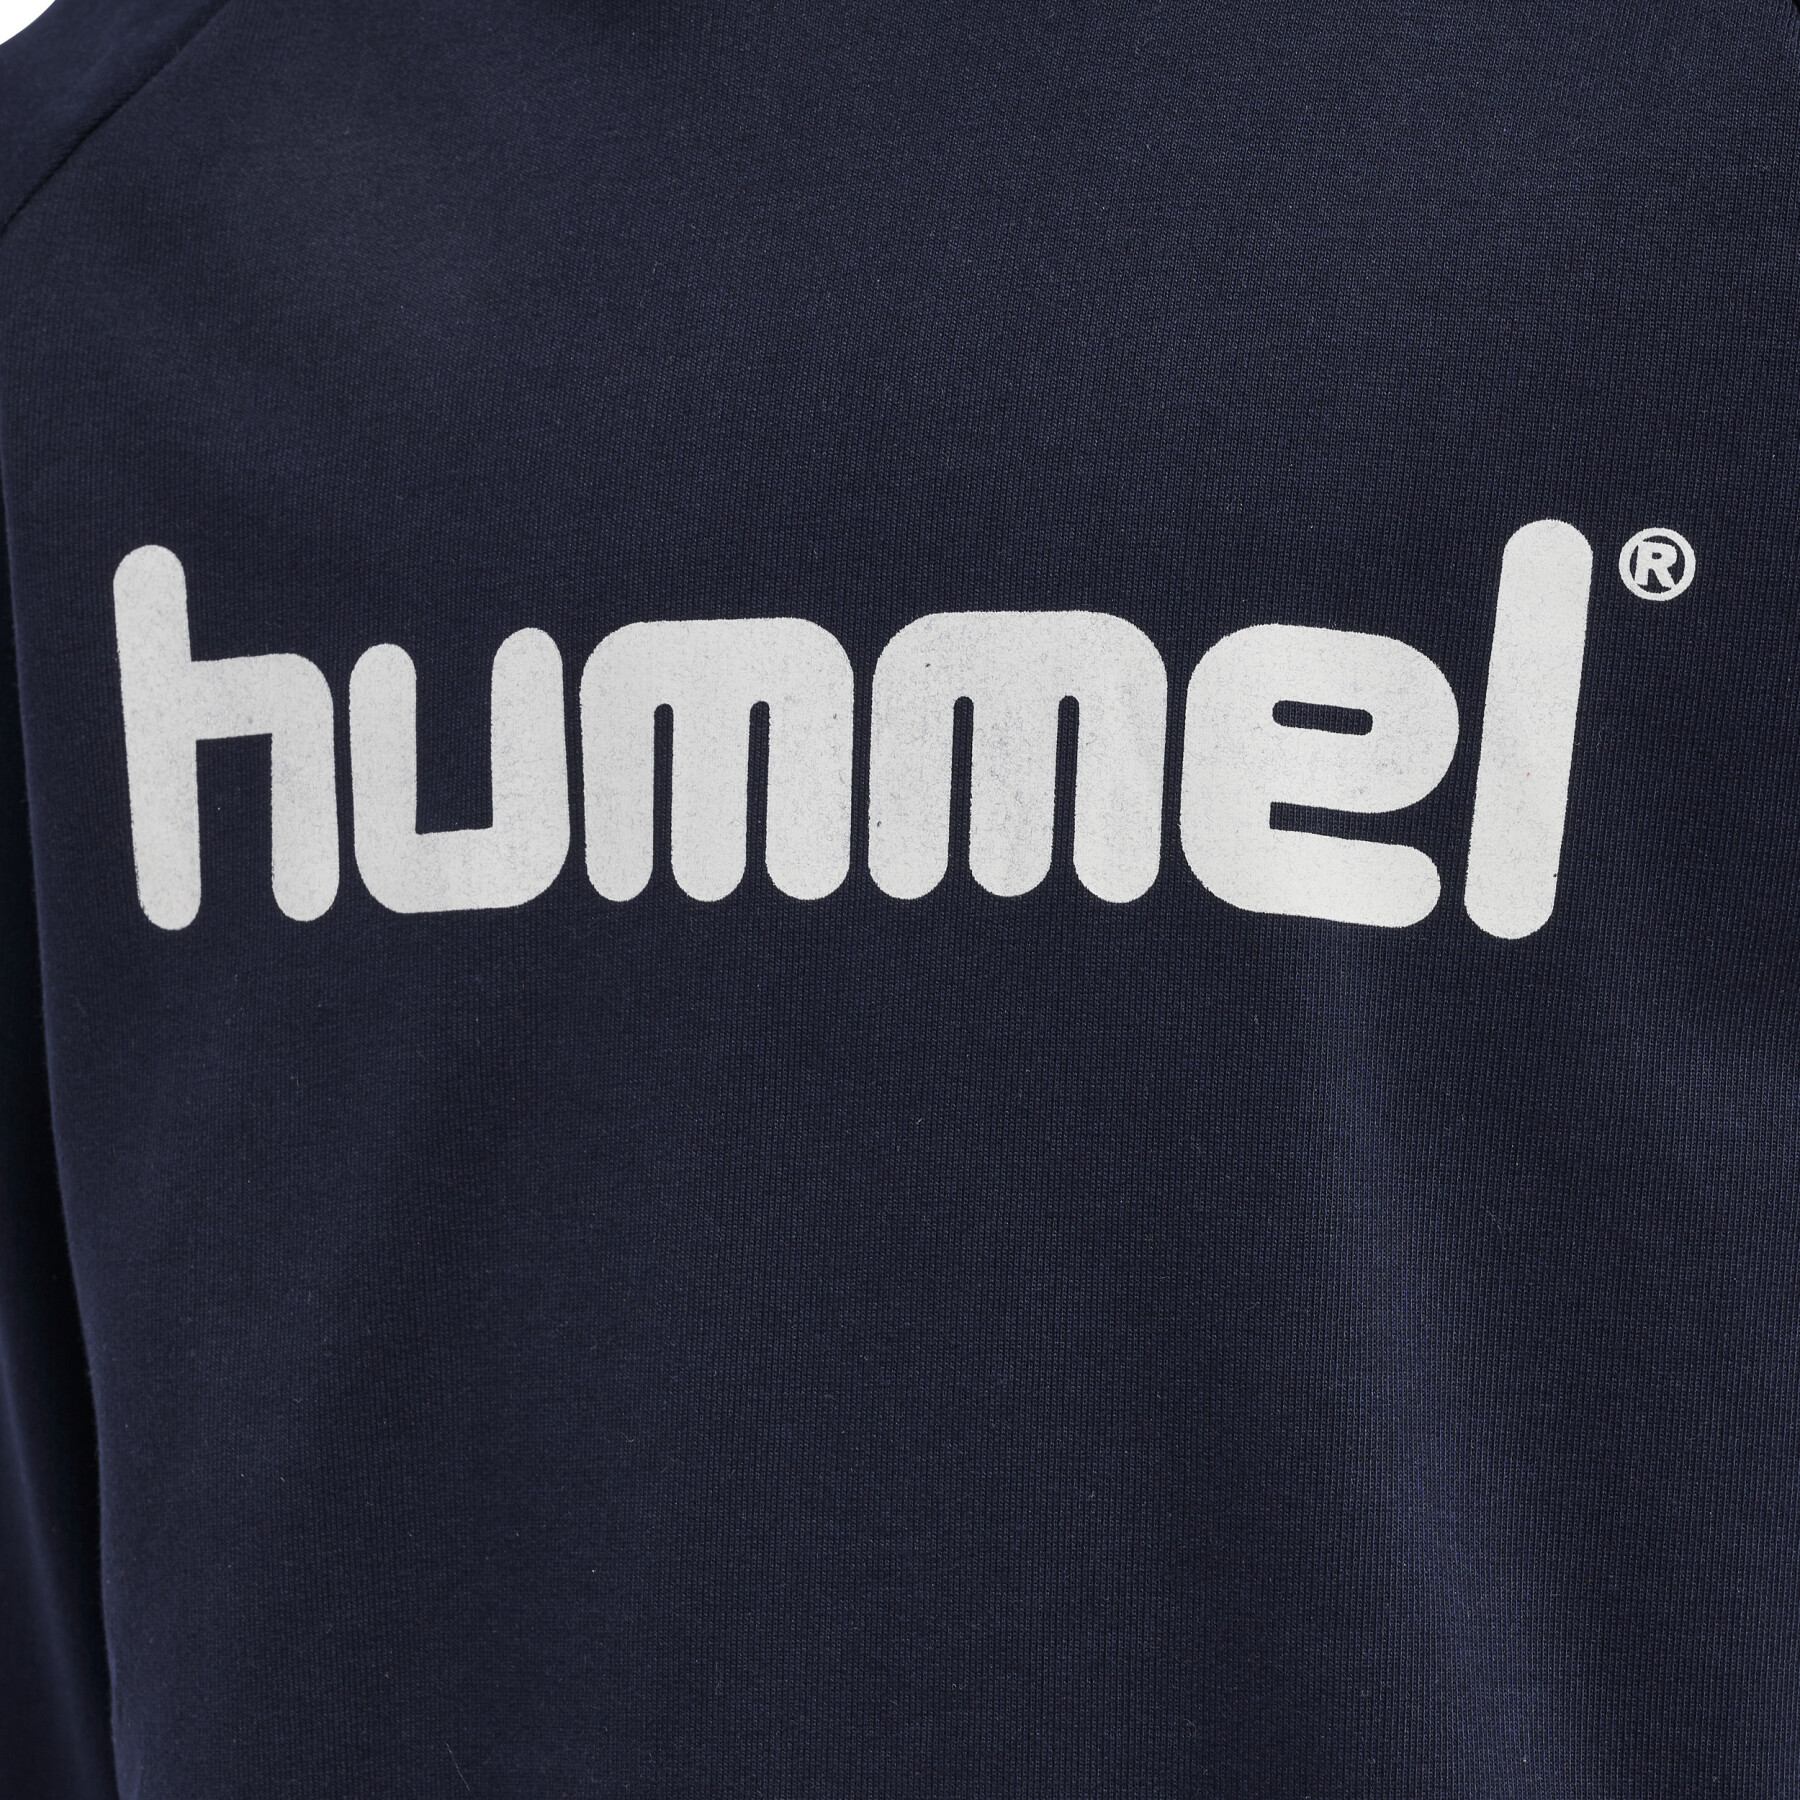 Junior Hoodie Hummel Cotton Logo